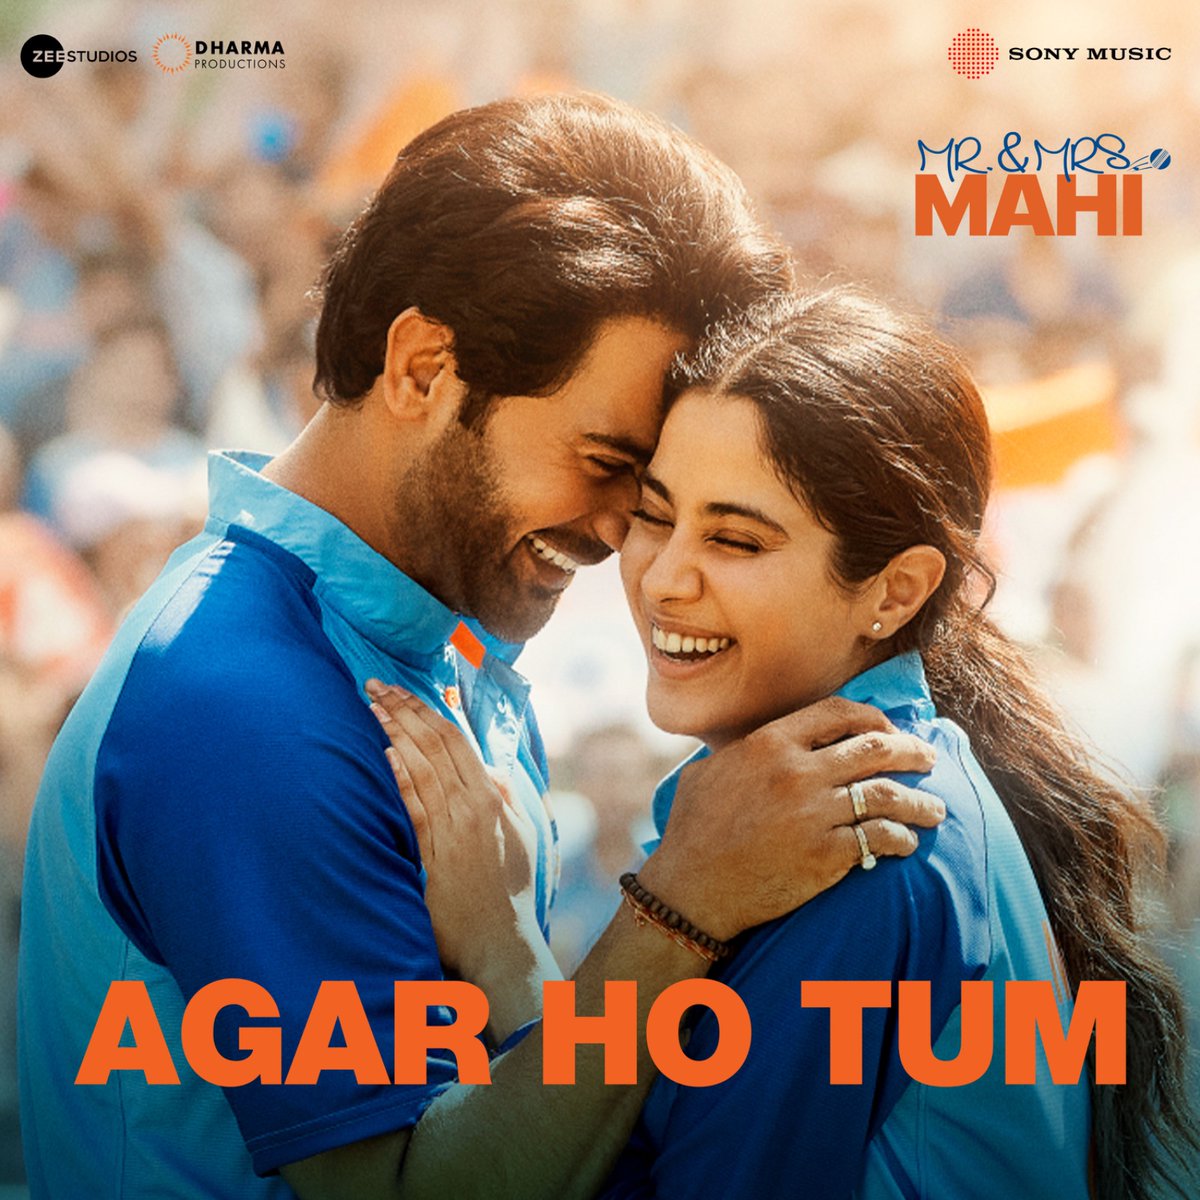 'Agar Ho Tum' out now! Rajkummar Rao and Janhvi Kapoor star in this romantic melody. Tune in and feel the magic!
#AgarHoTum
#MrAndMrsMahi 

#KaranJohar @apoorvamehta18 @RajkummarRao #JanhviKapoor #SharanSharma #NikhilMehrotra @somenmishra0 @tanishkbagchi @JubinNautiyal